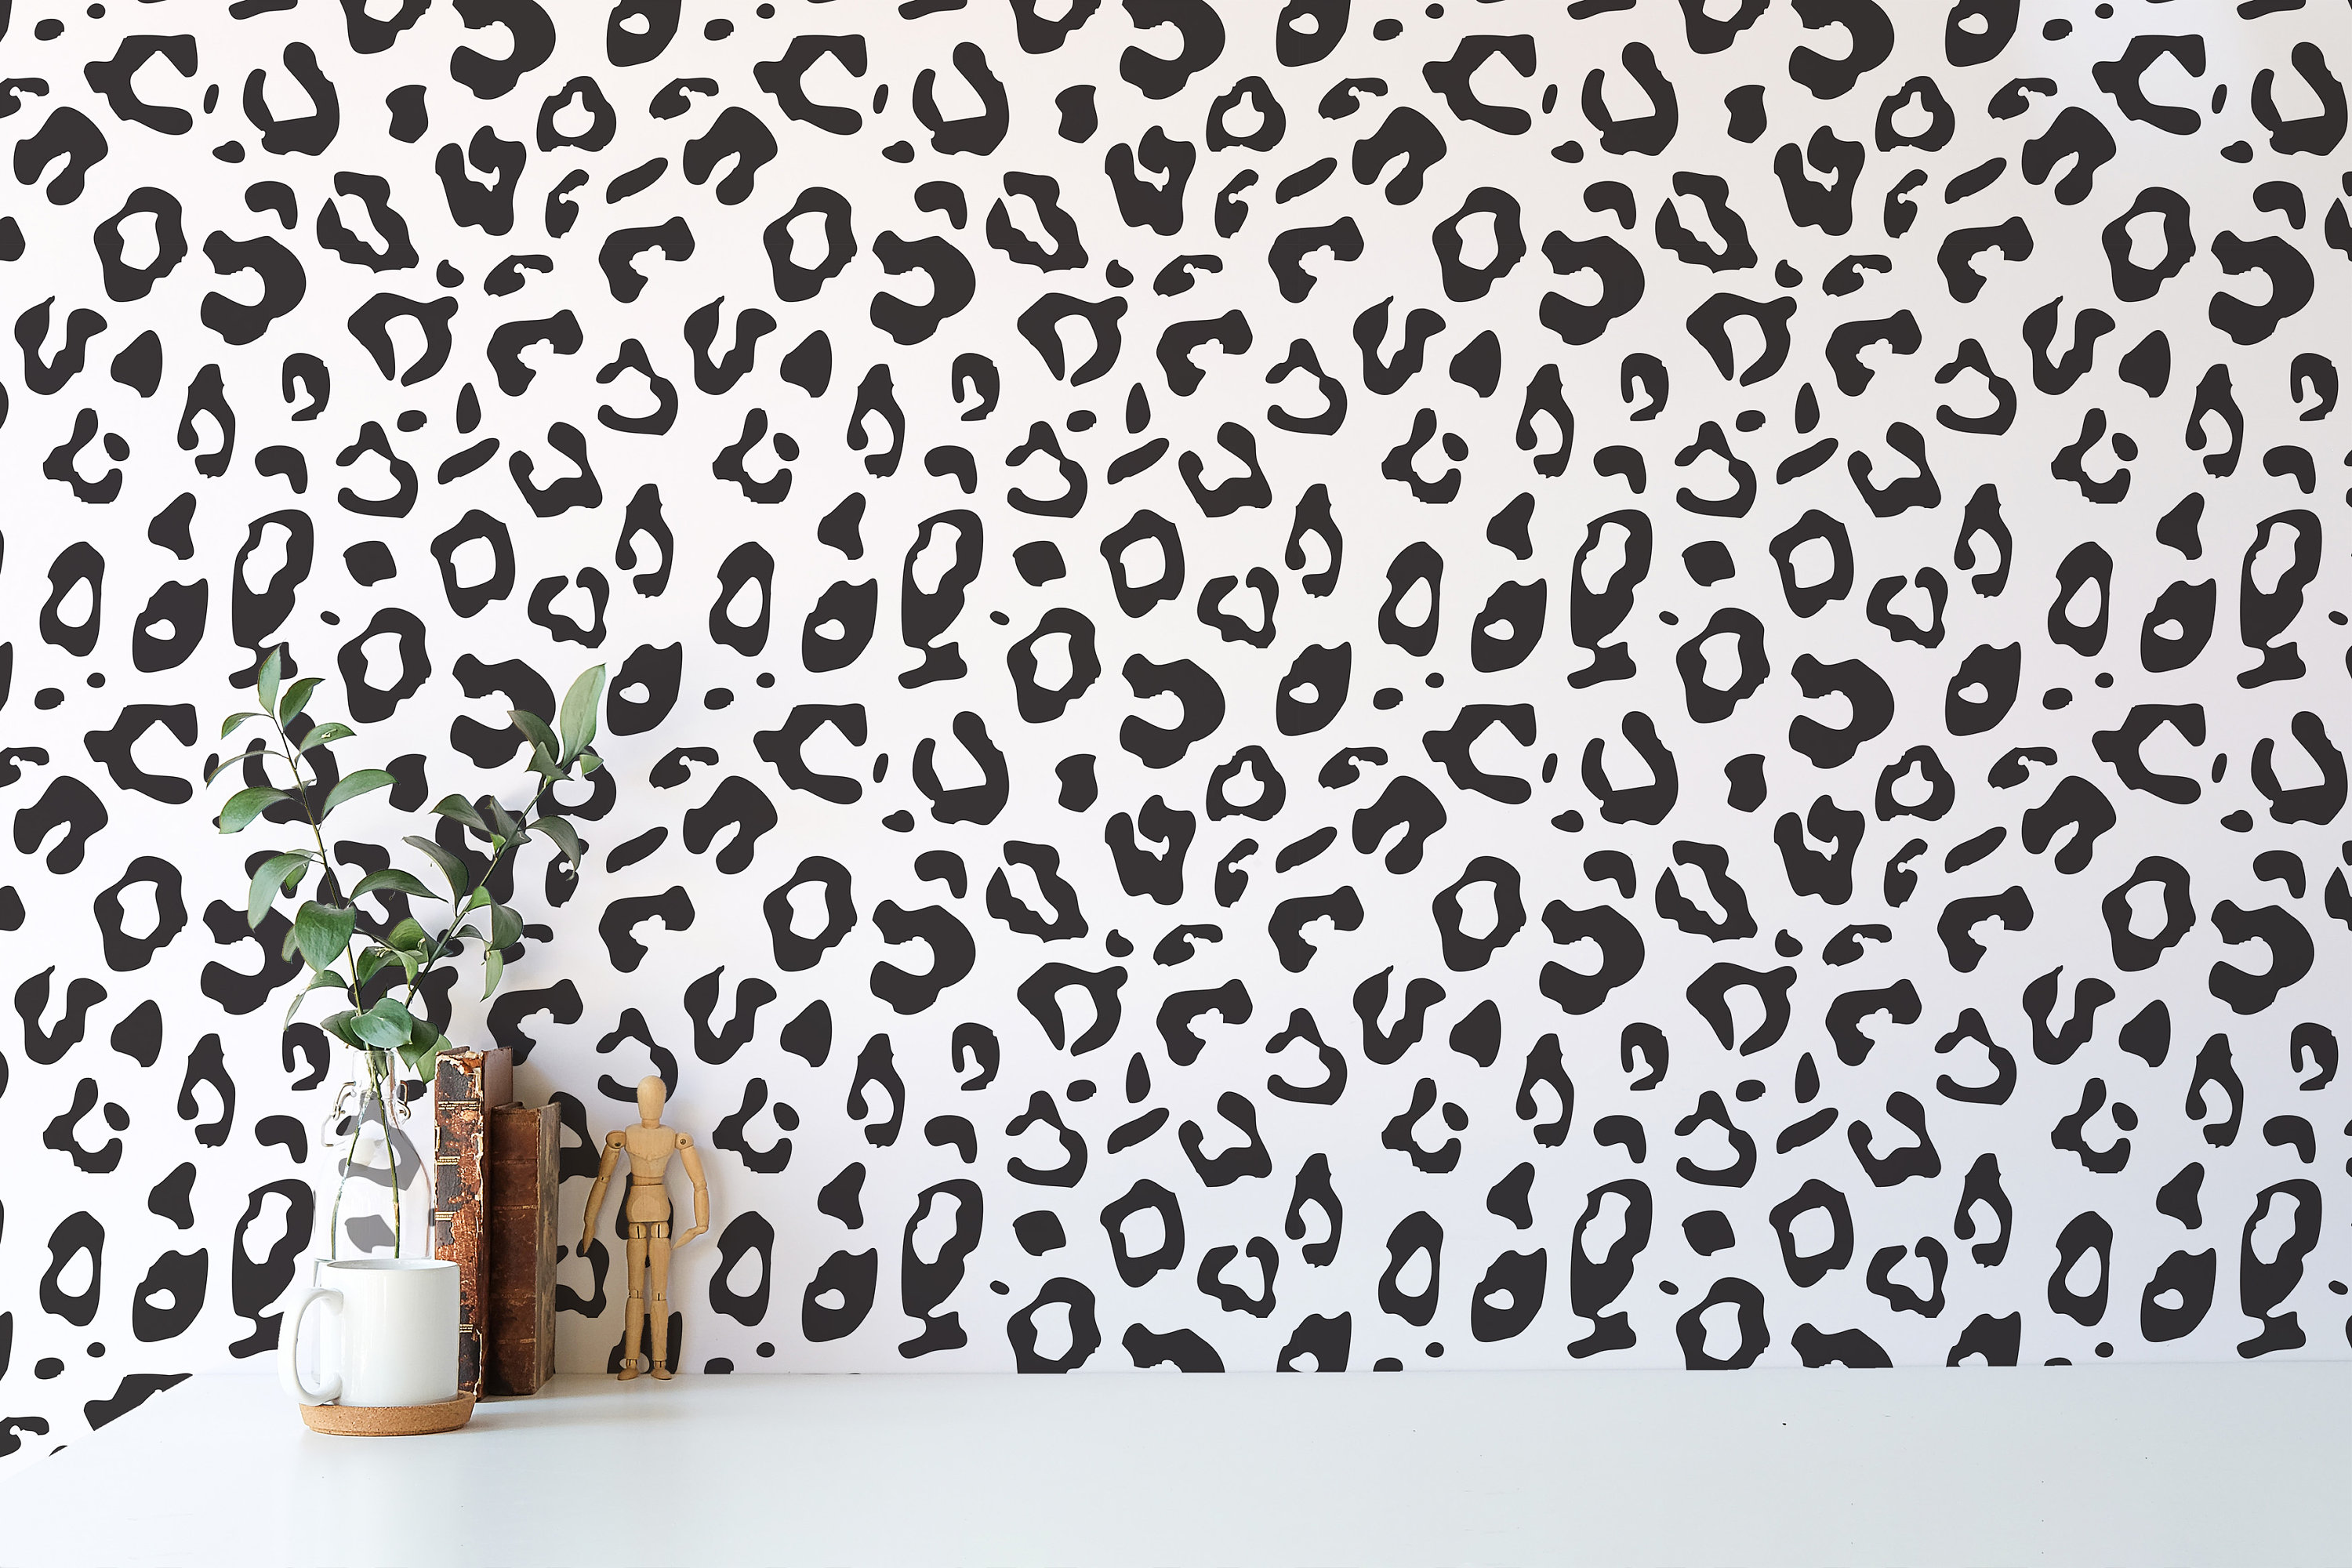 Leopard Spot Pattern Removable Wallpaper / Animal Print Peel photo photo photo